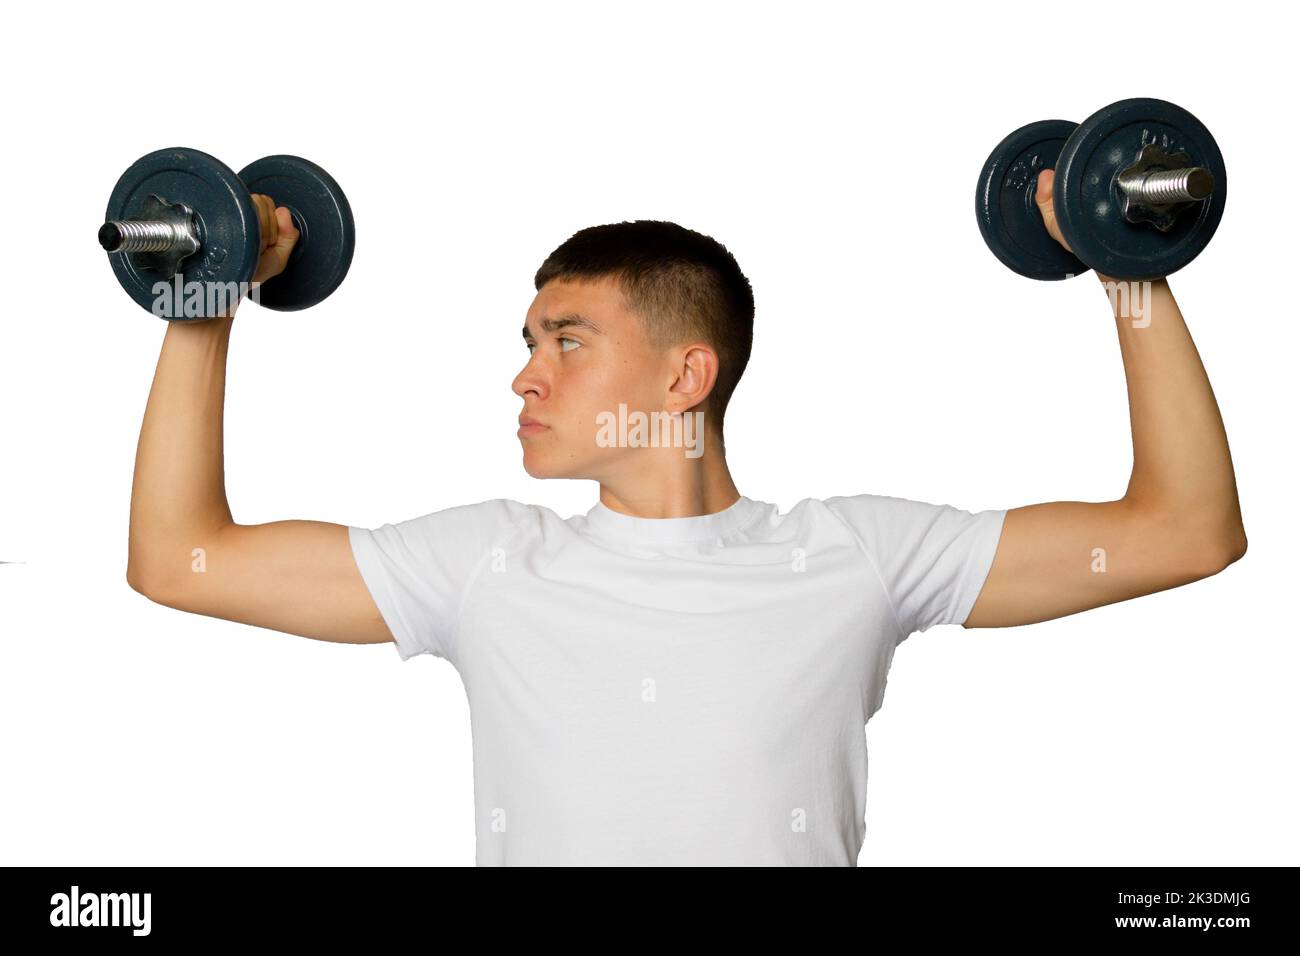 19 year old teenage boy lifting dumbbells Stock Photo